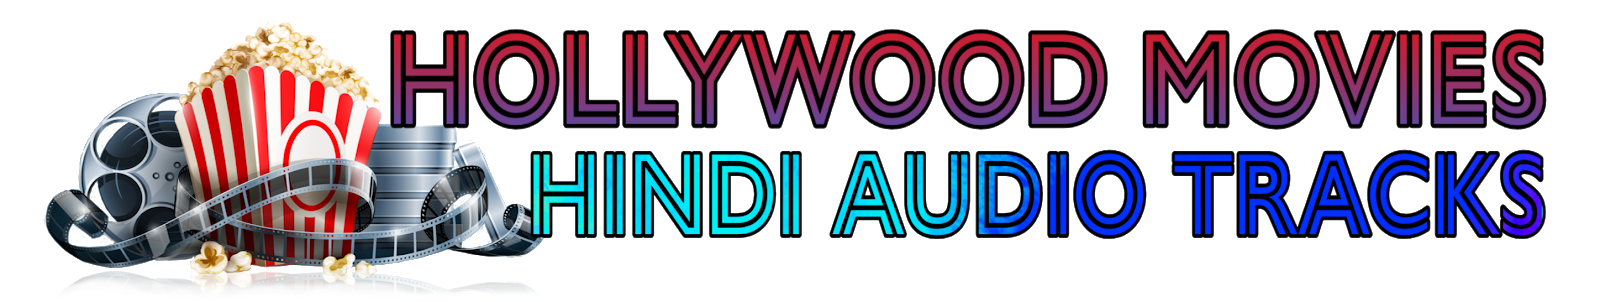 HOLLYWOOD MOVIES HINDI AUDIO TRACKS - Download For Free